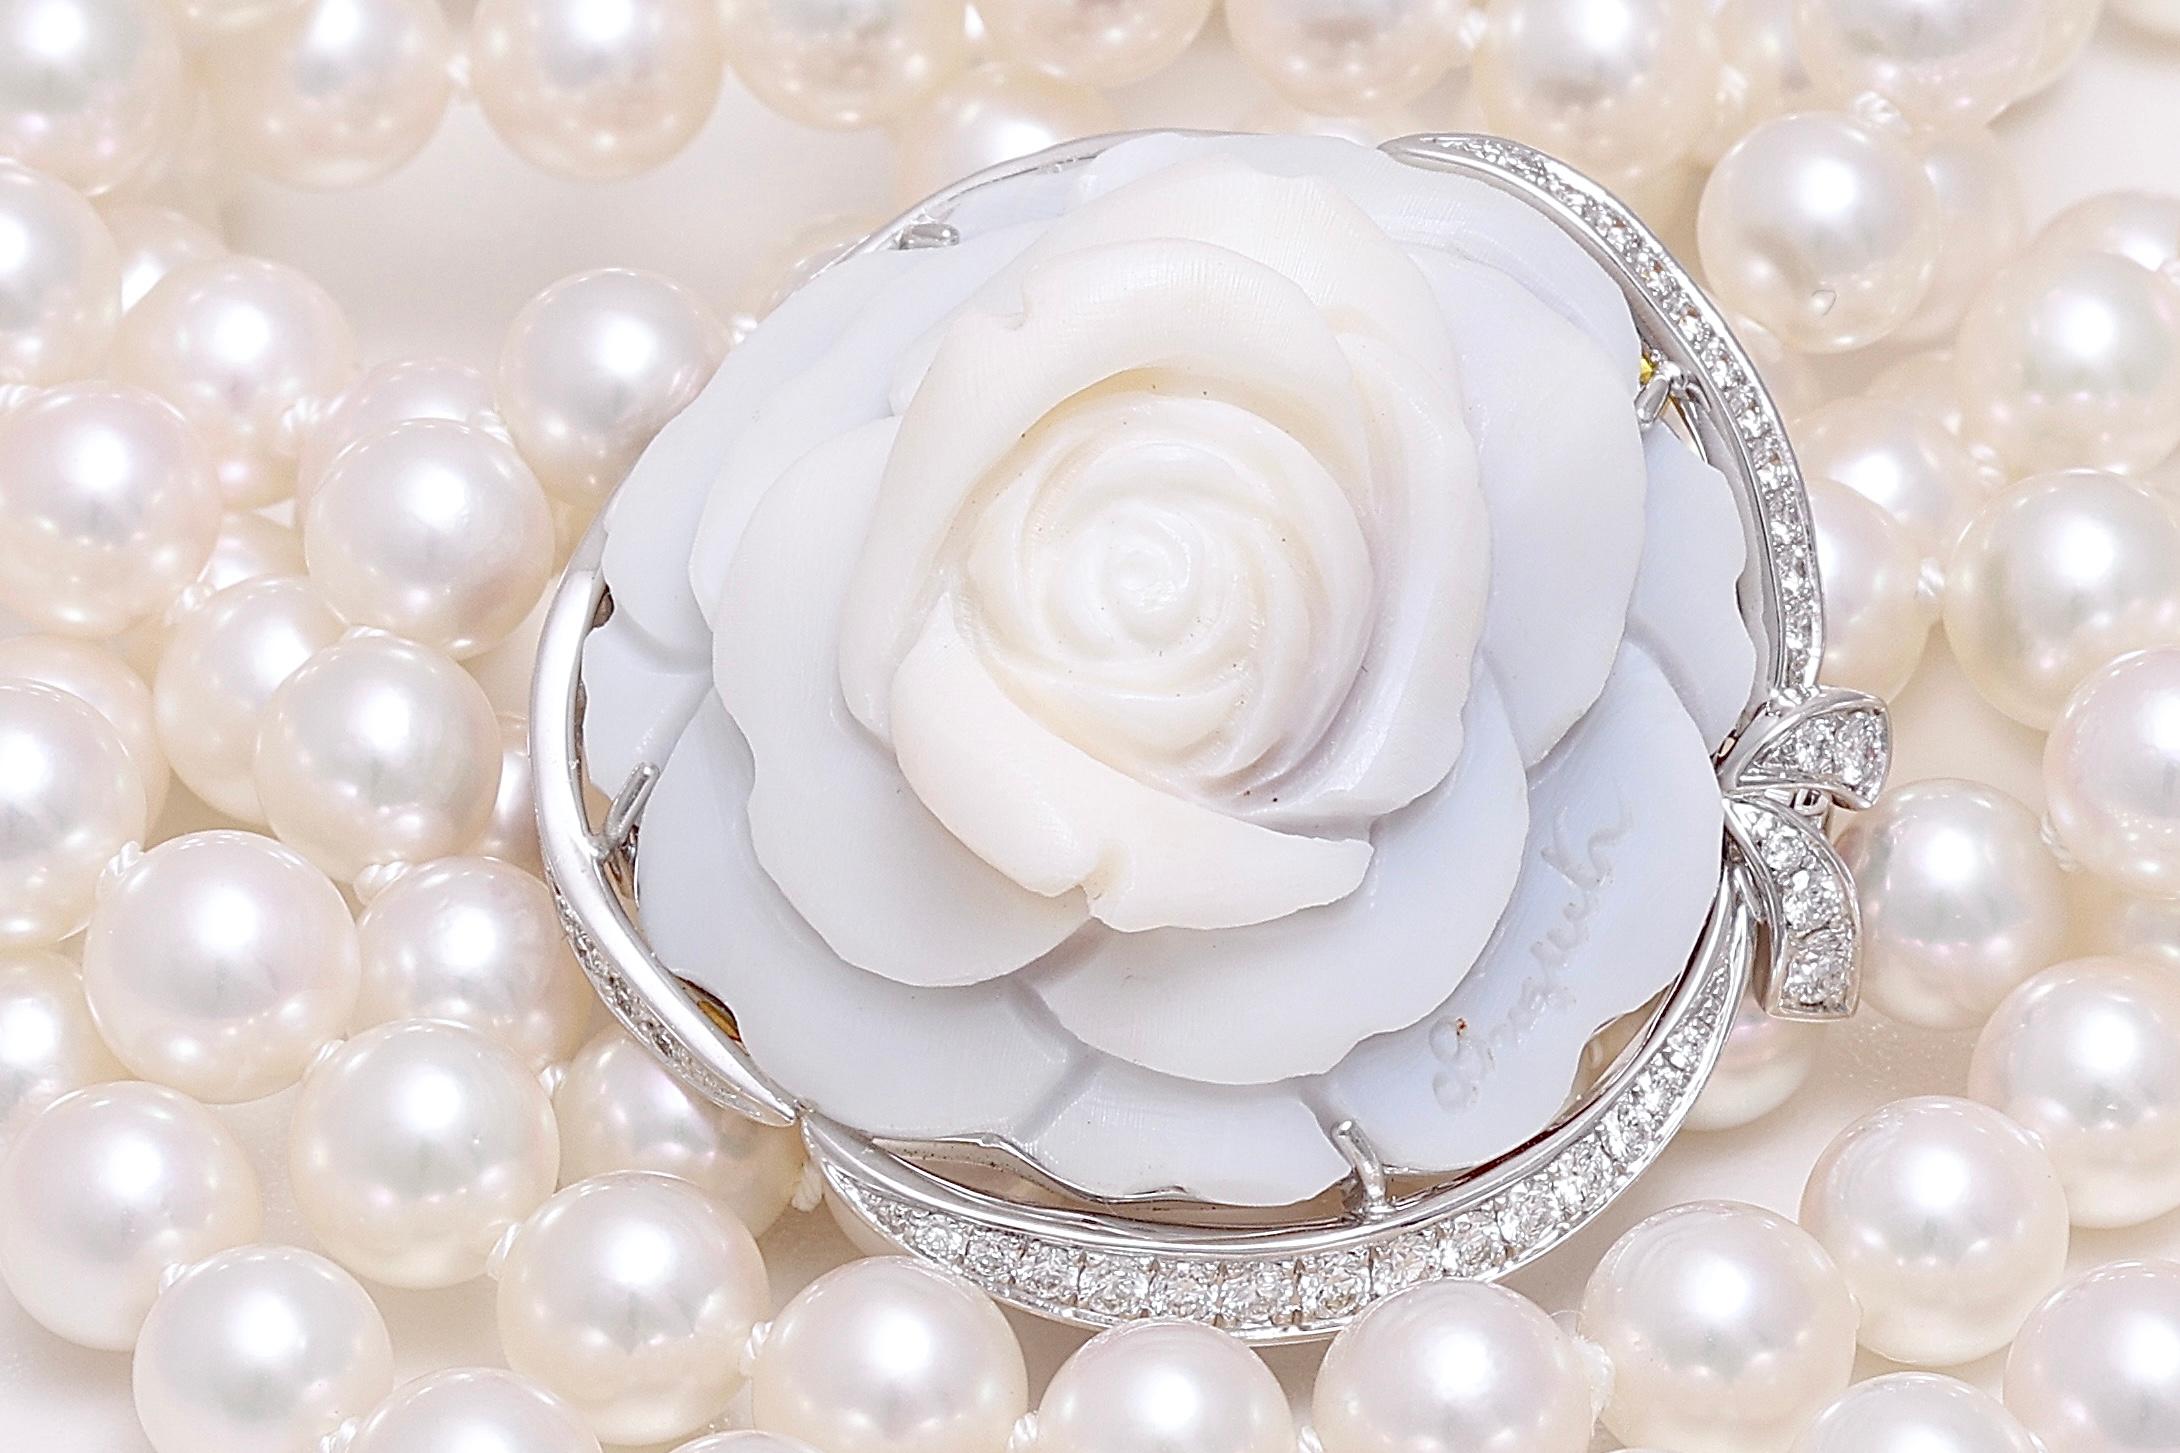 18 Kt Breguet Diamonds Pearl Necklace / Brooch / Earrings Flower Cameo s 1